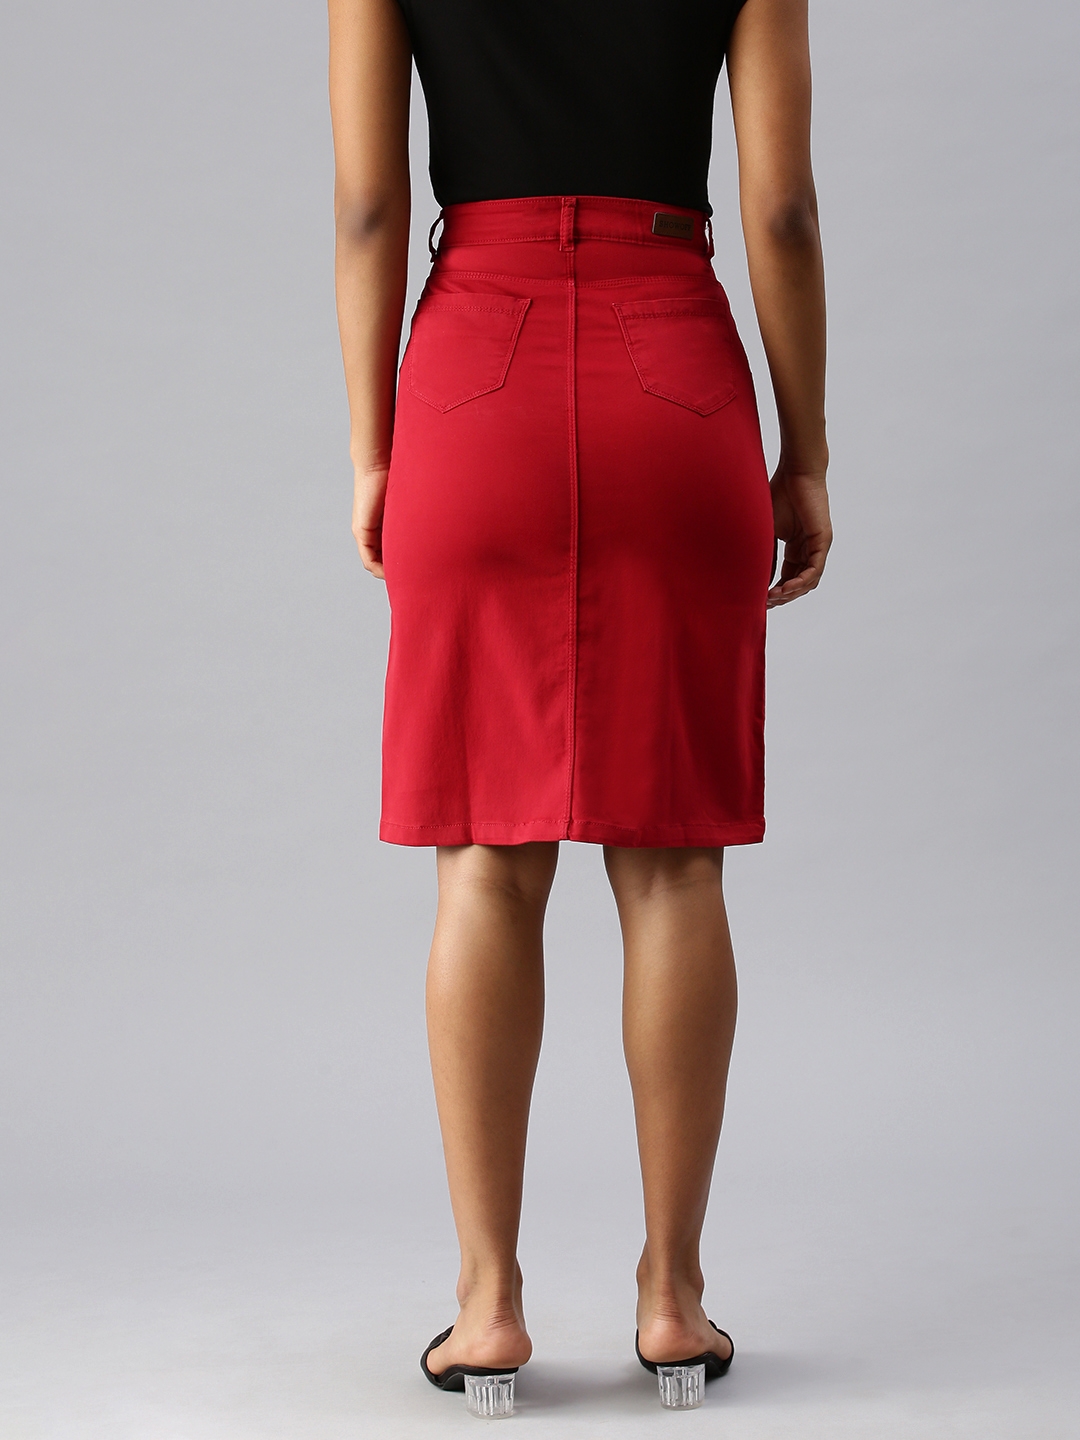 Showoff | SHOWOFF Women's Solid Red Denim Skirt 2